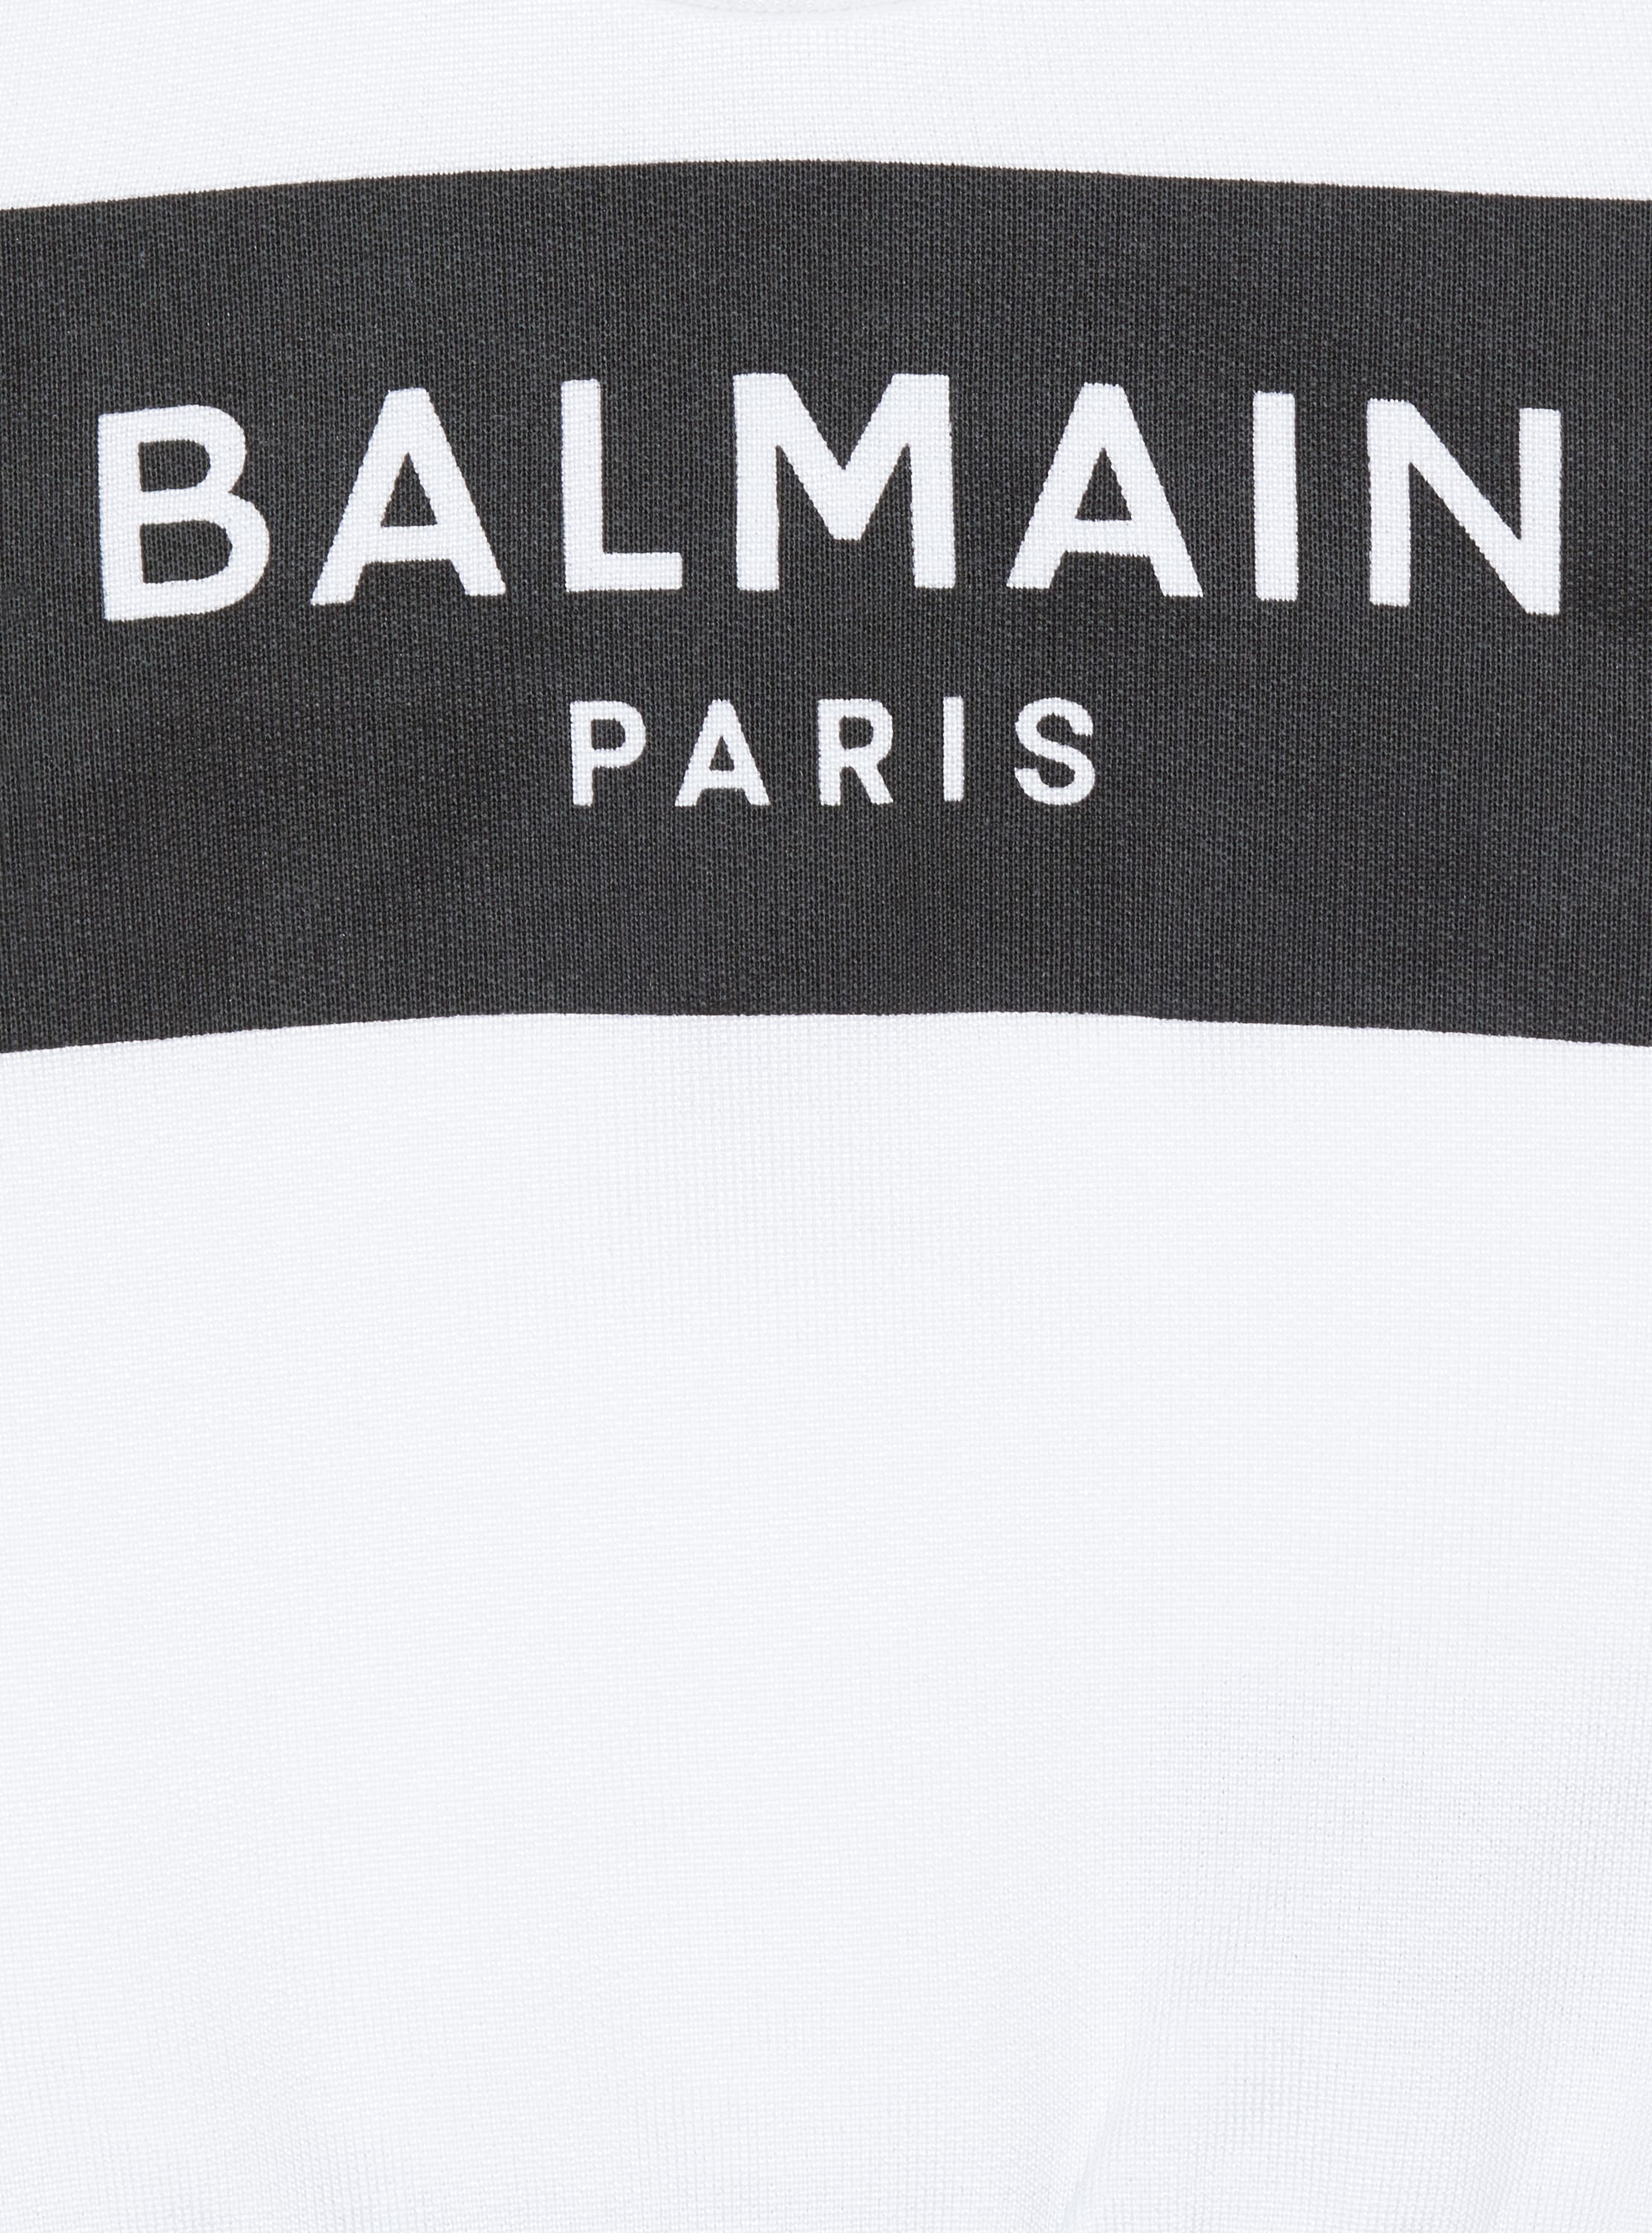 Balmain Paris 卫衣